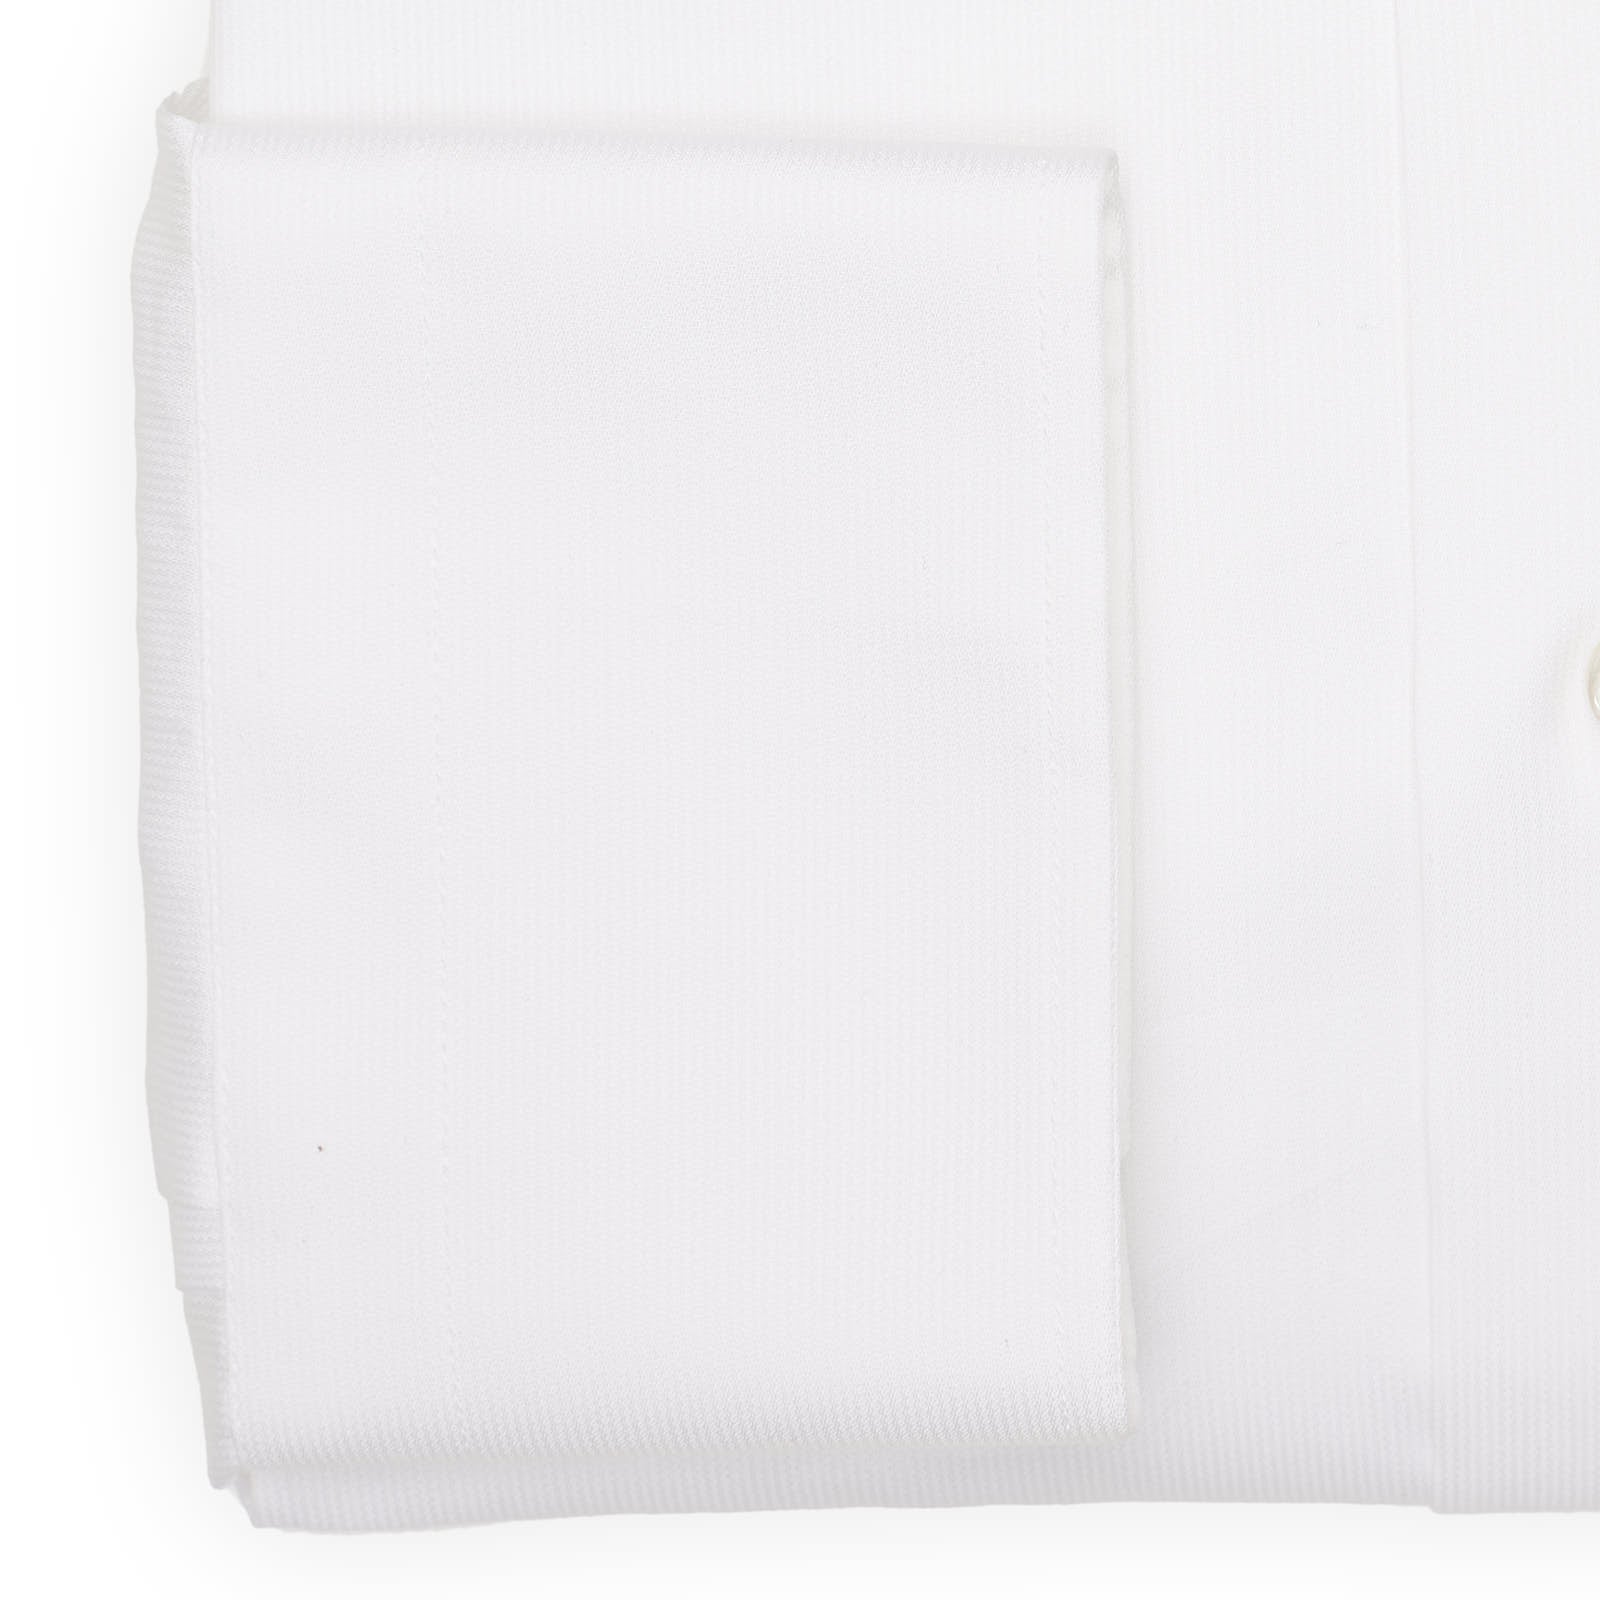 BARBA Napoli Handmade White Twill Cotton Dress Shirt NEW Club Collar